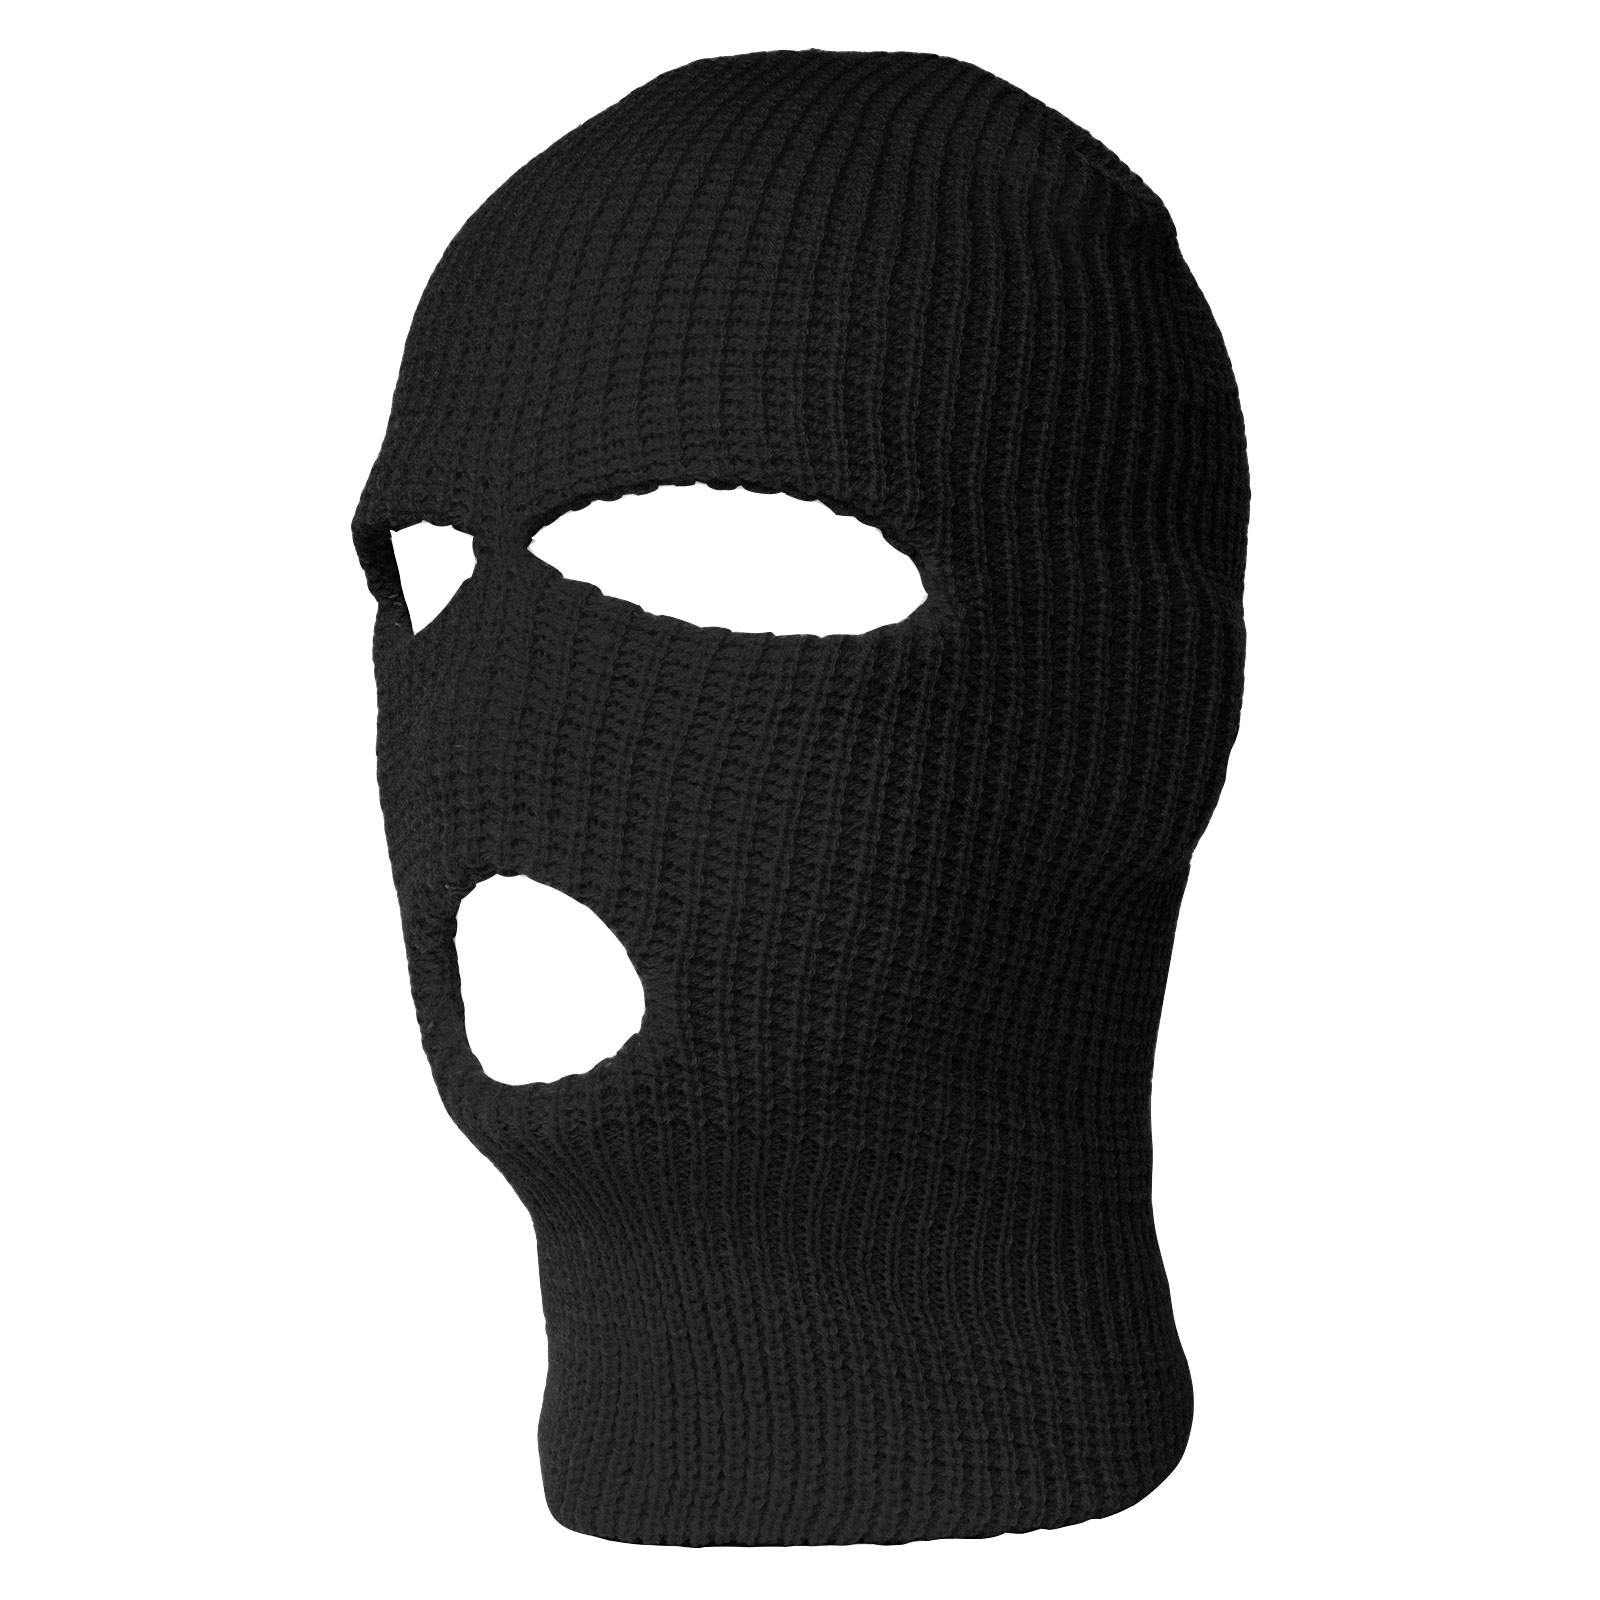 TopHeadwear 1-Hole Winter Ski Mask 